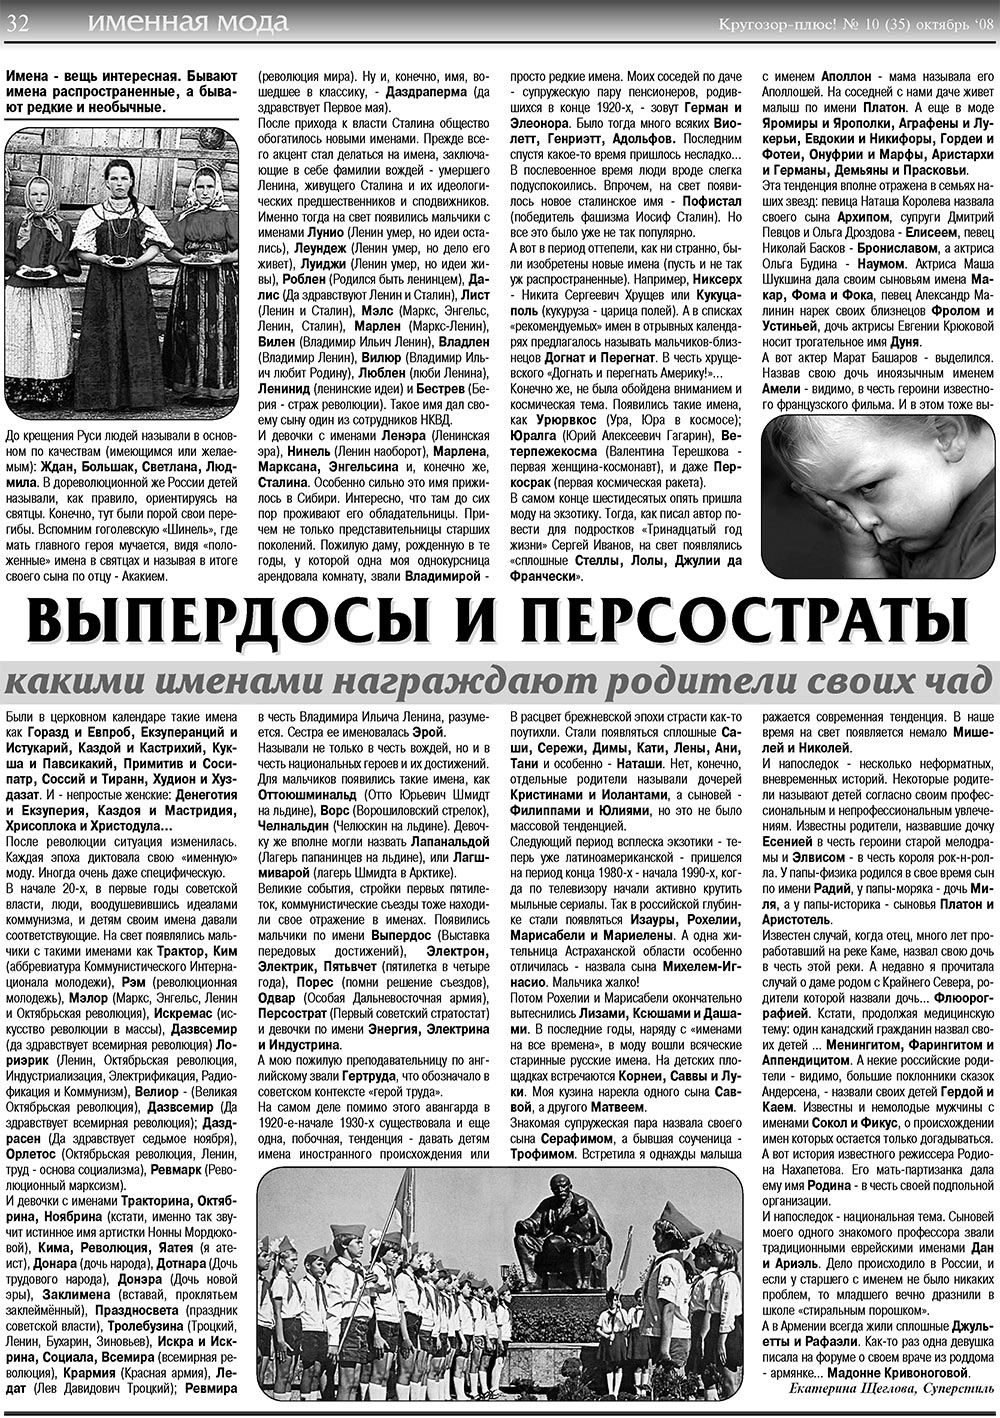 Кругозор плюс! (газета). 2008 год, номер 10, стр. 32